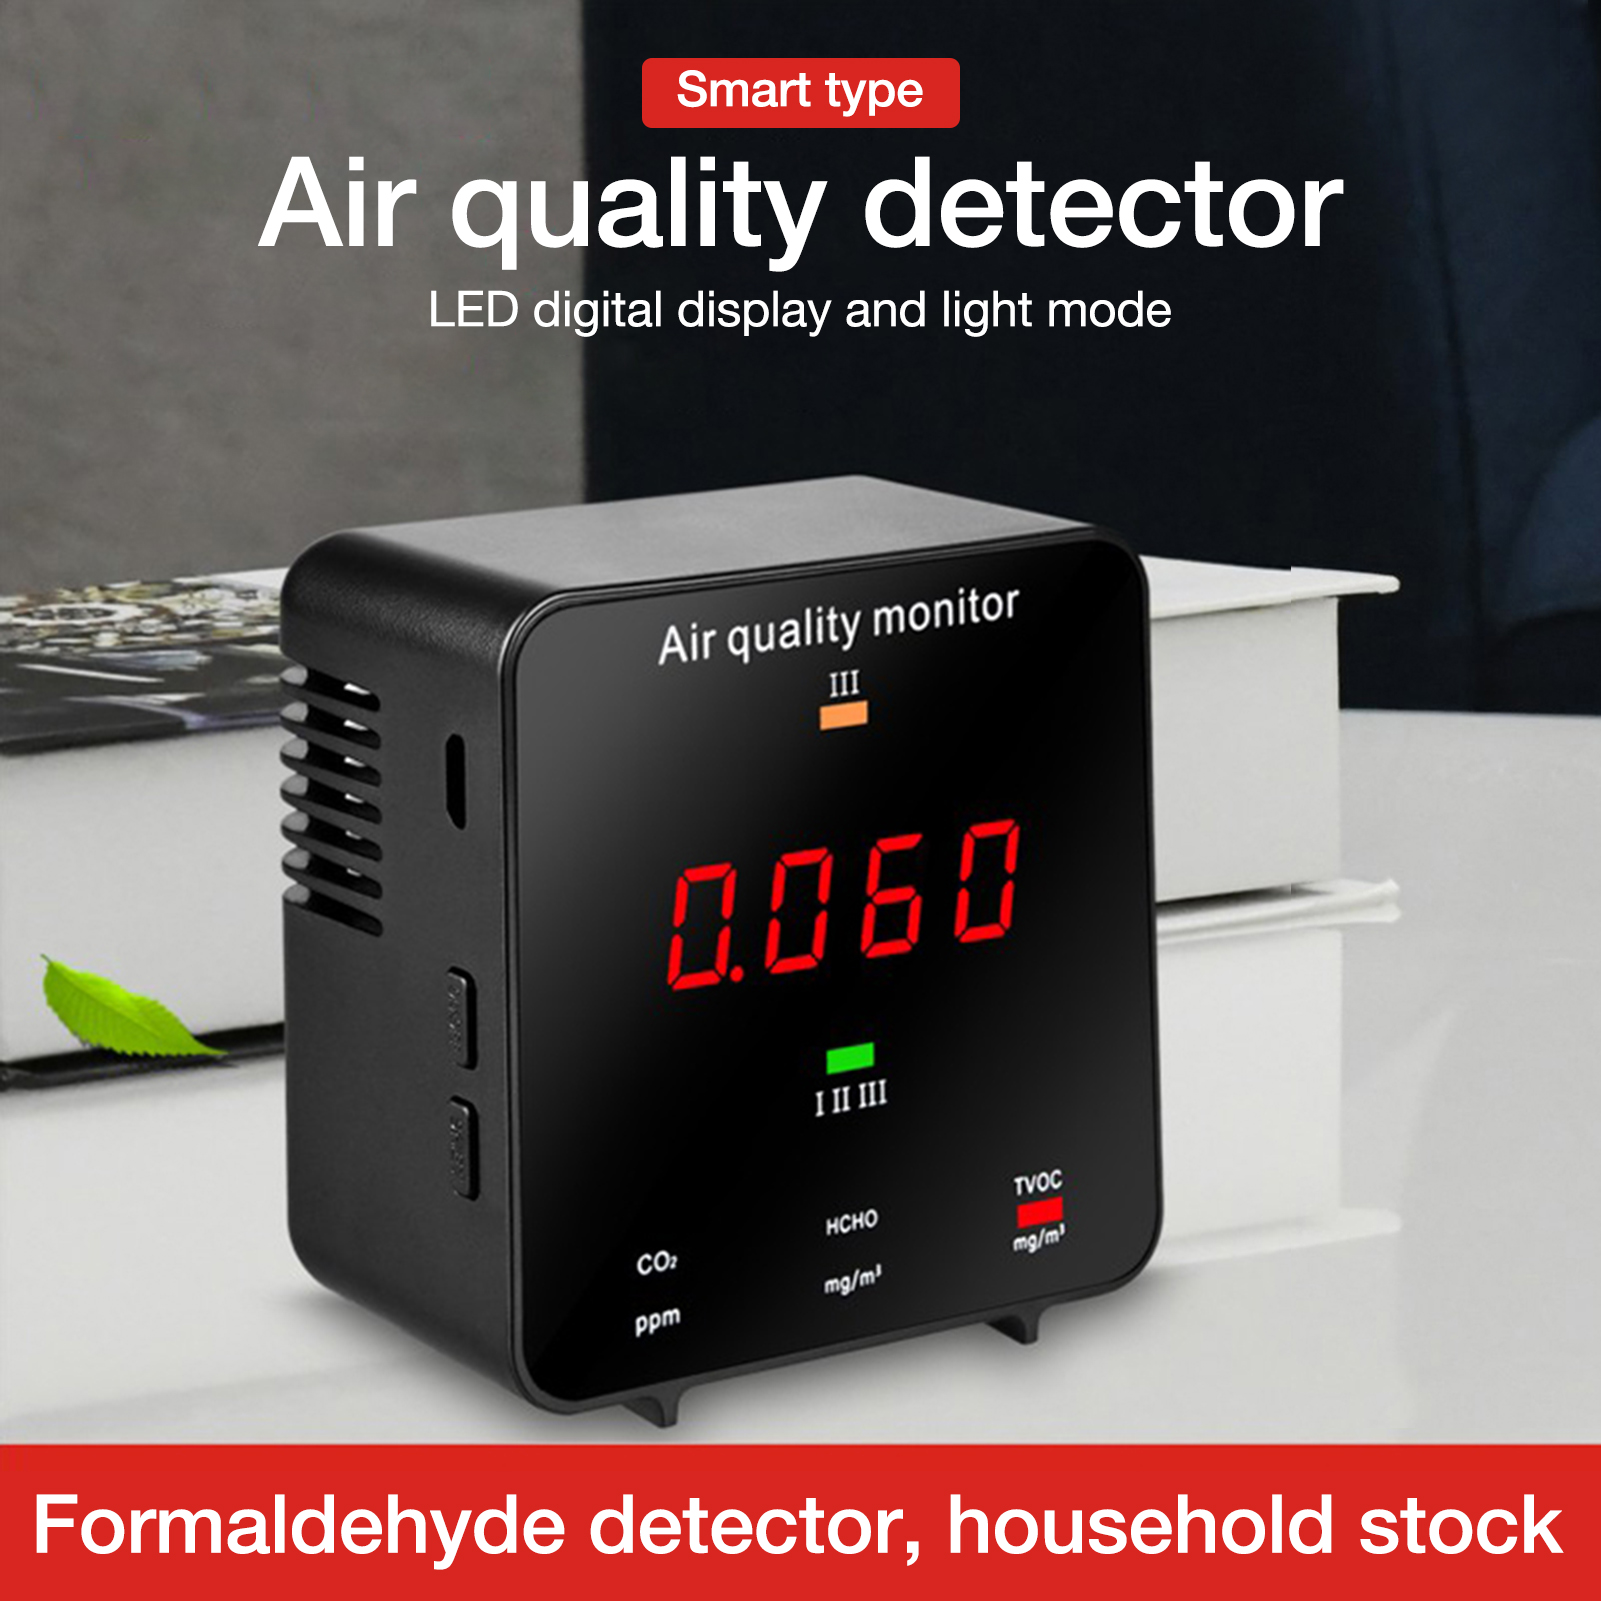 CO2-Meter-Digital-Temperature-Humidity-Sensor-Tester-Air-Quality-Monitor-Carbon-Dioxide-TVOC-Formald-1824199-1